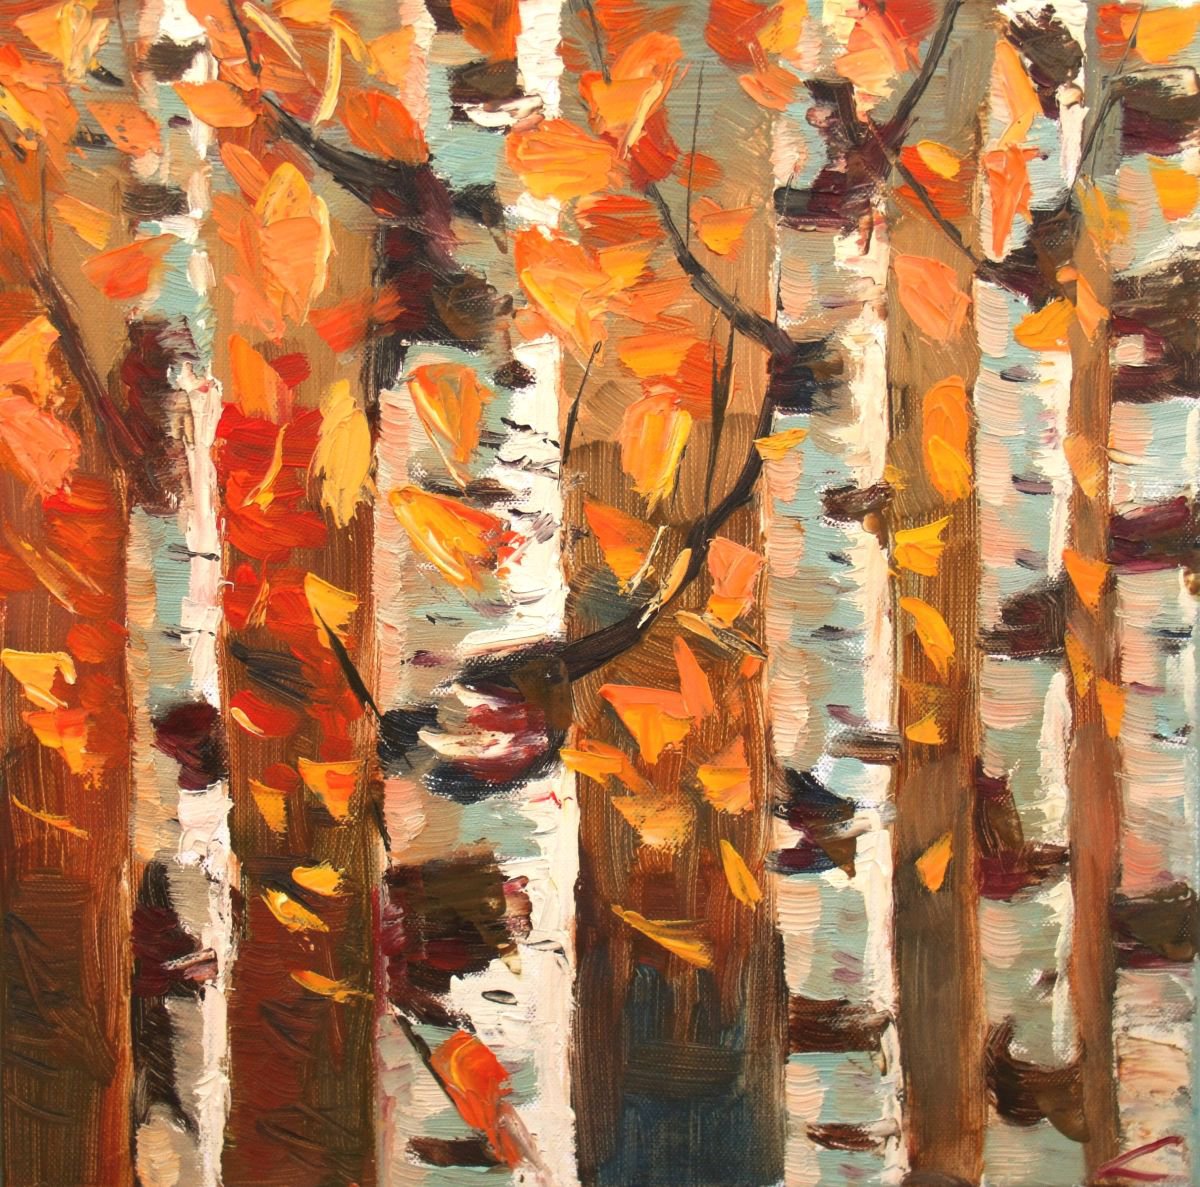 Birches2 by Elena Sokolova